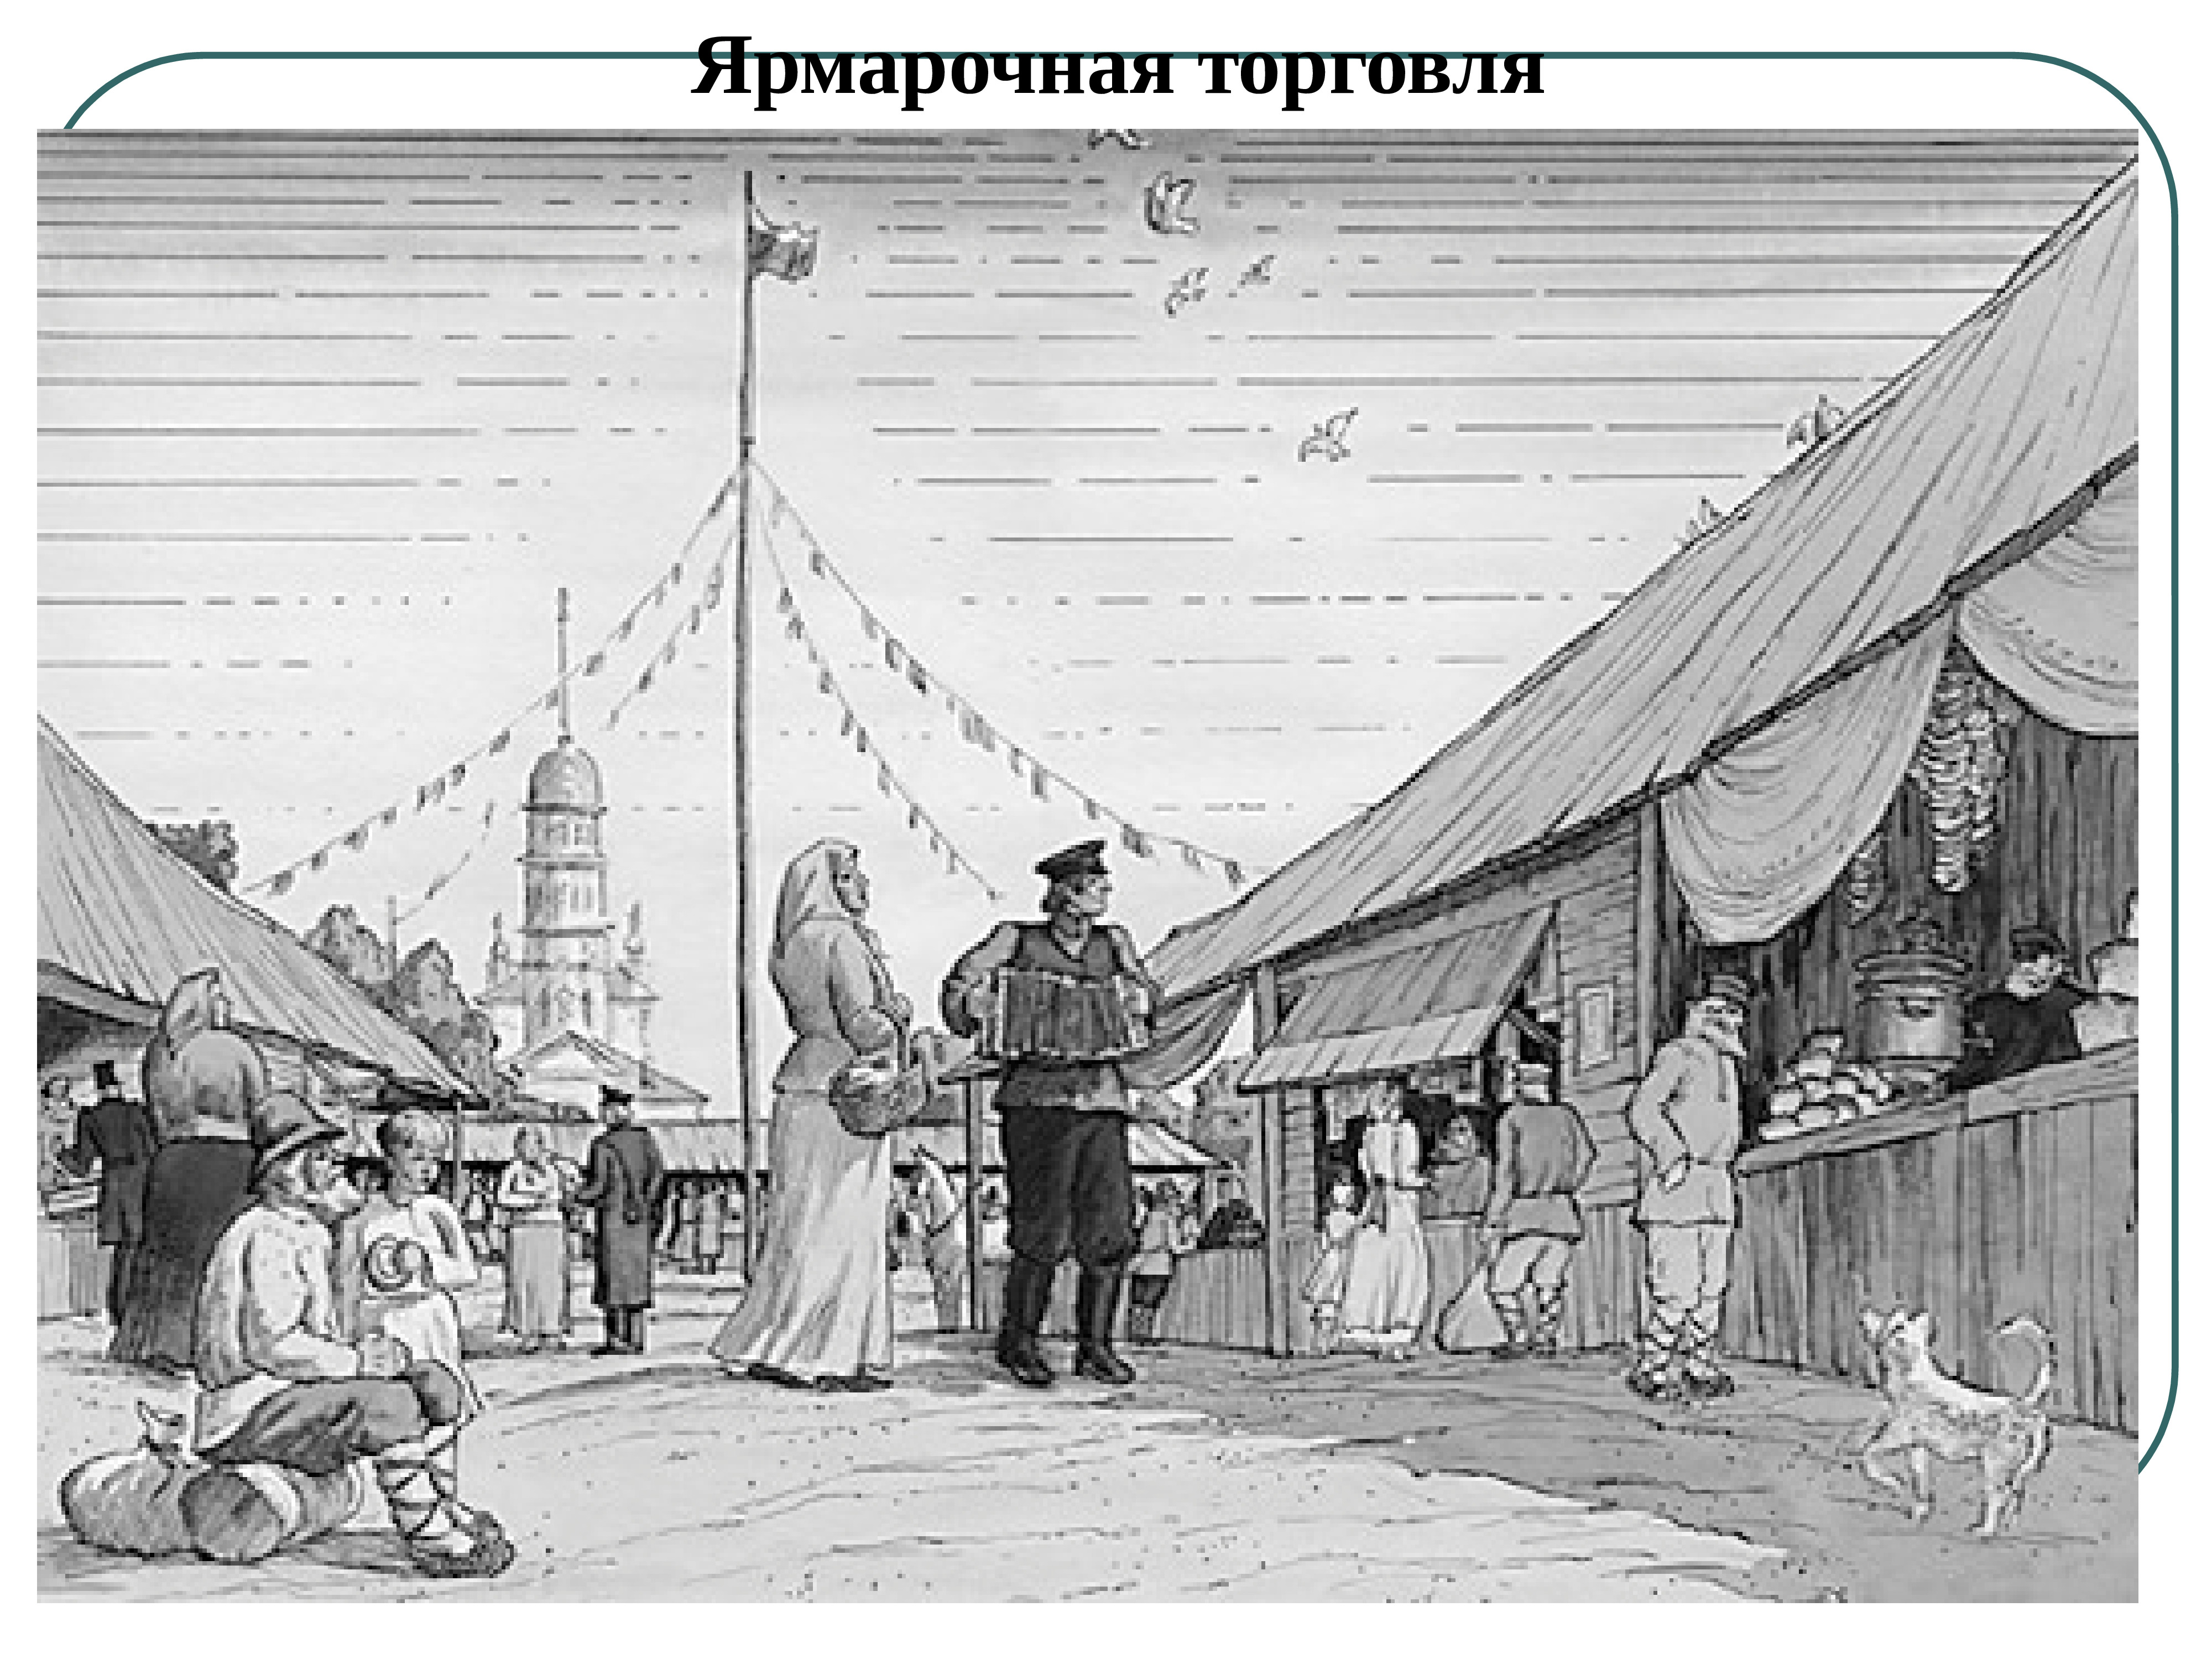 Базар 19 века в России